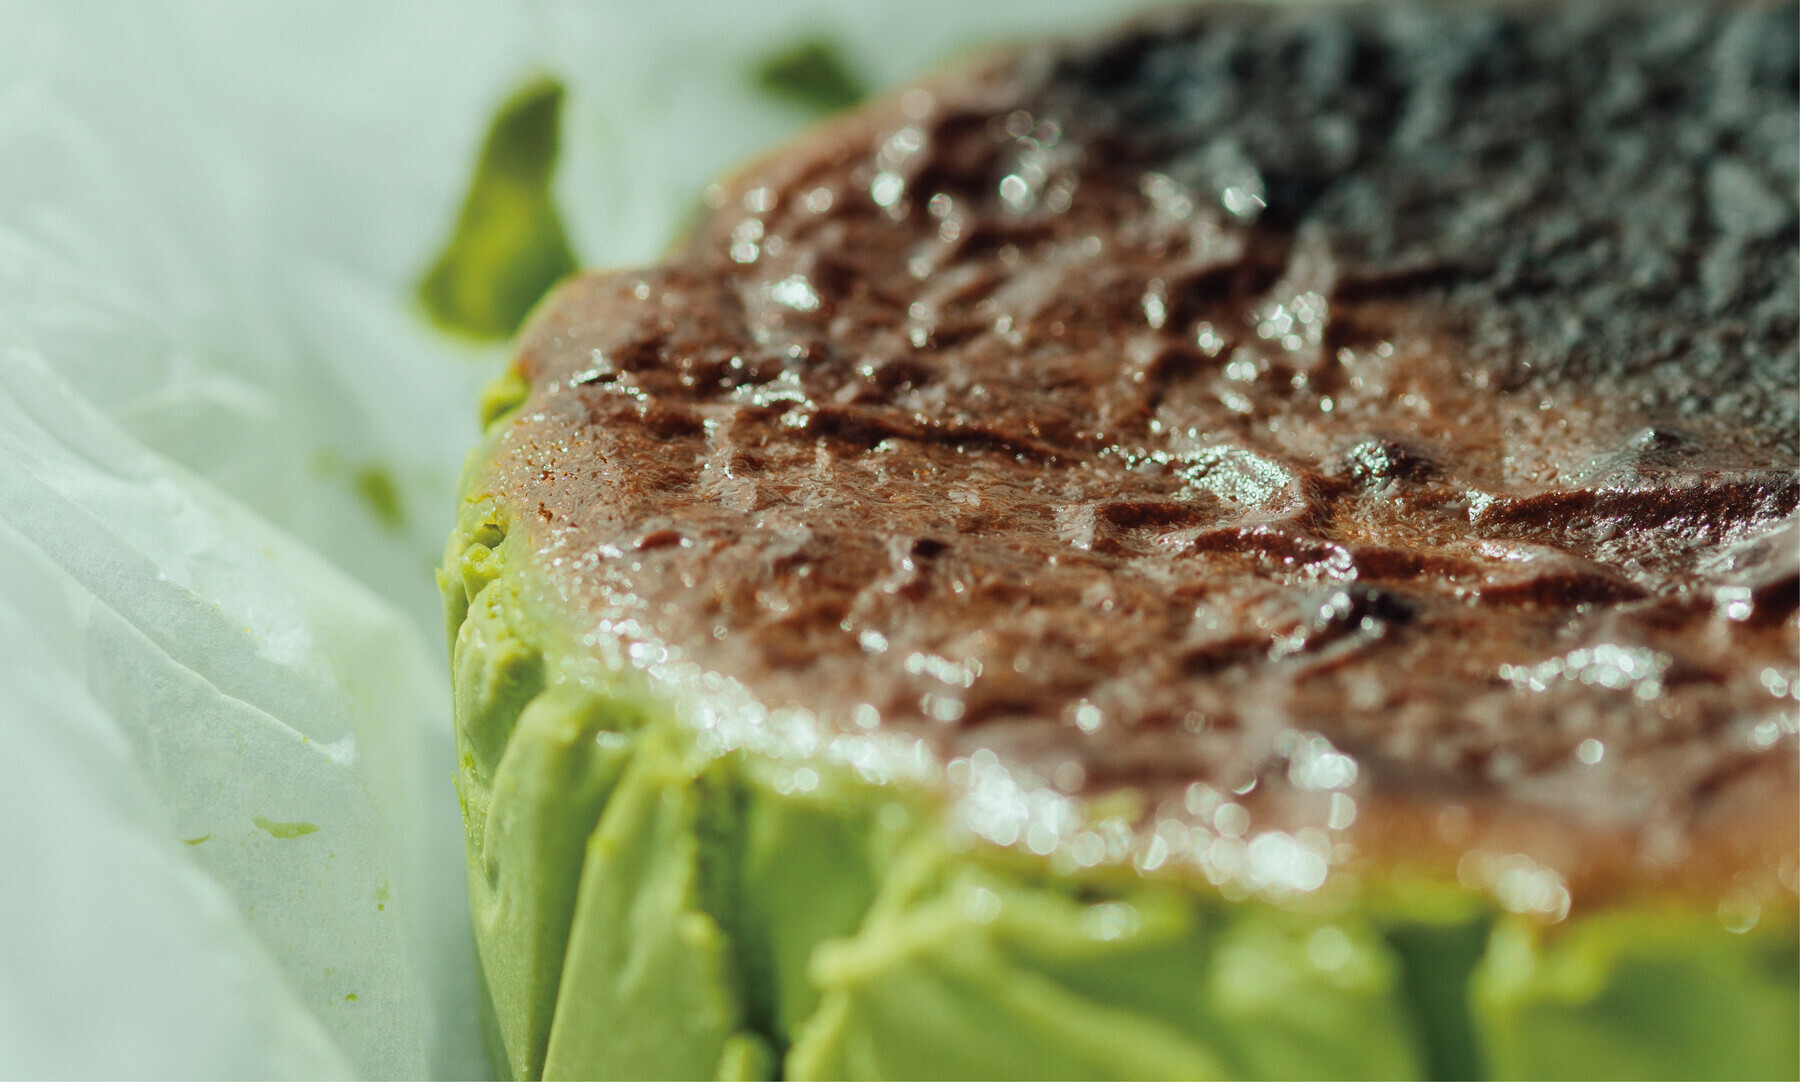 BLANCA verde(ベルデ)抹茶のバスクチーズケーキ